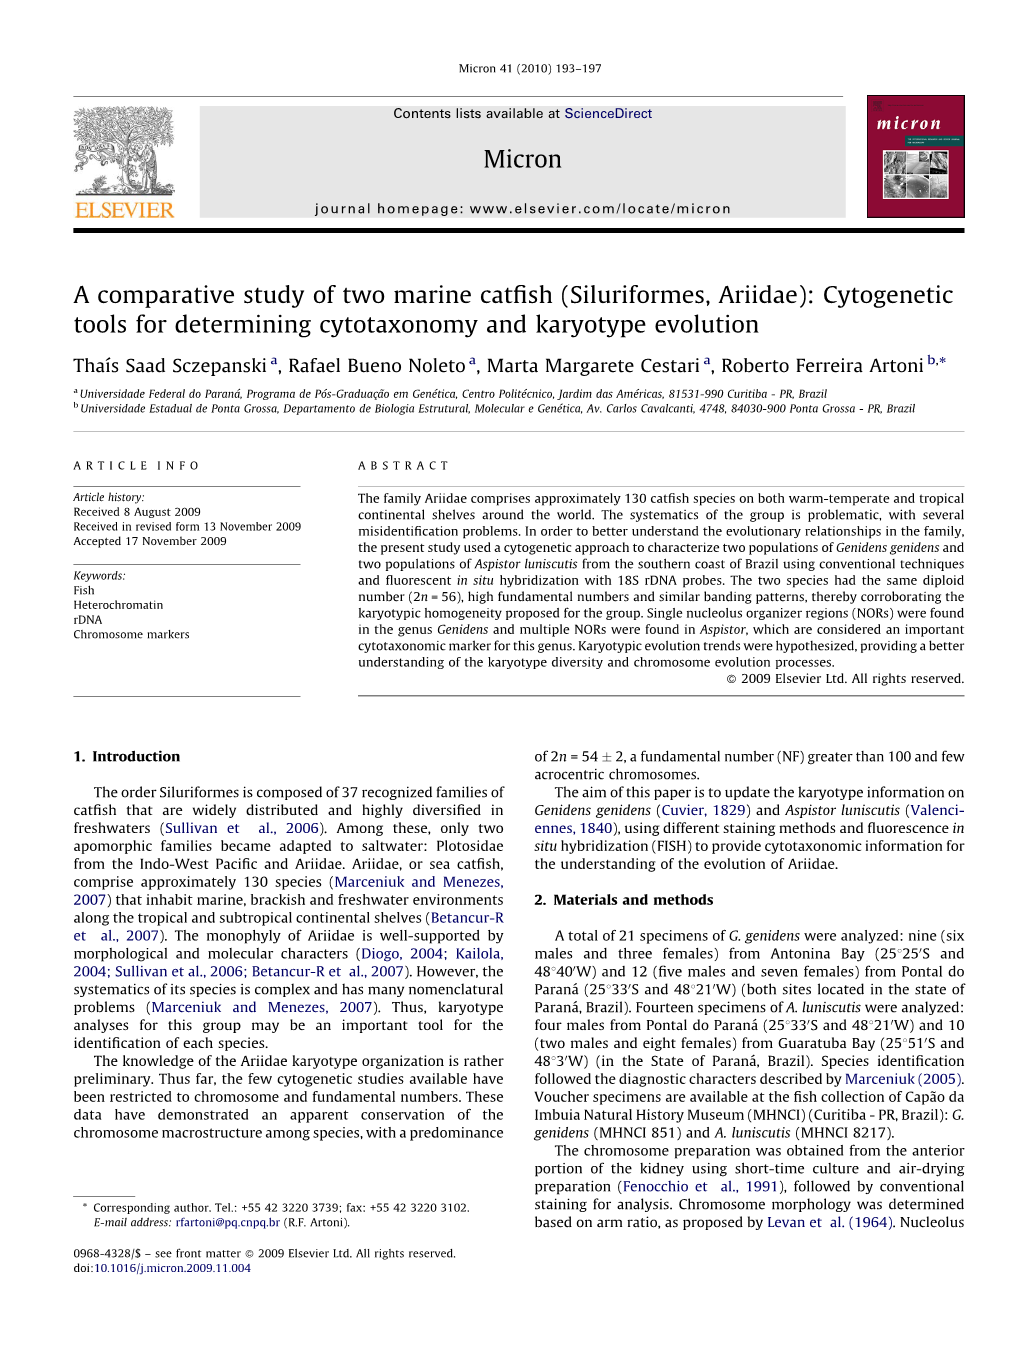 A Comparative Study of Two Marine Catfish (Siluriformes, Ariidae